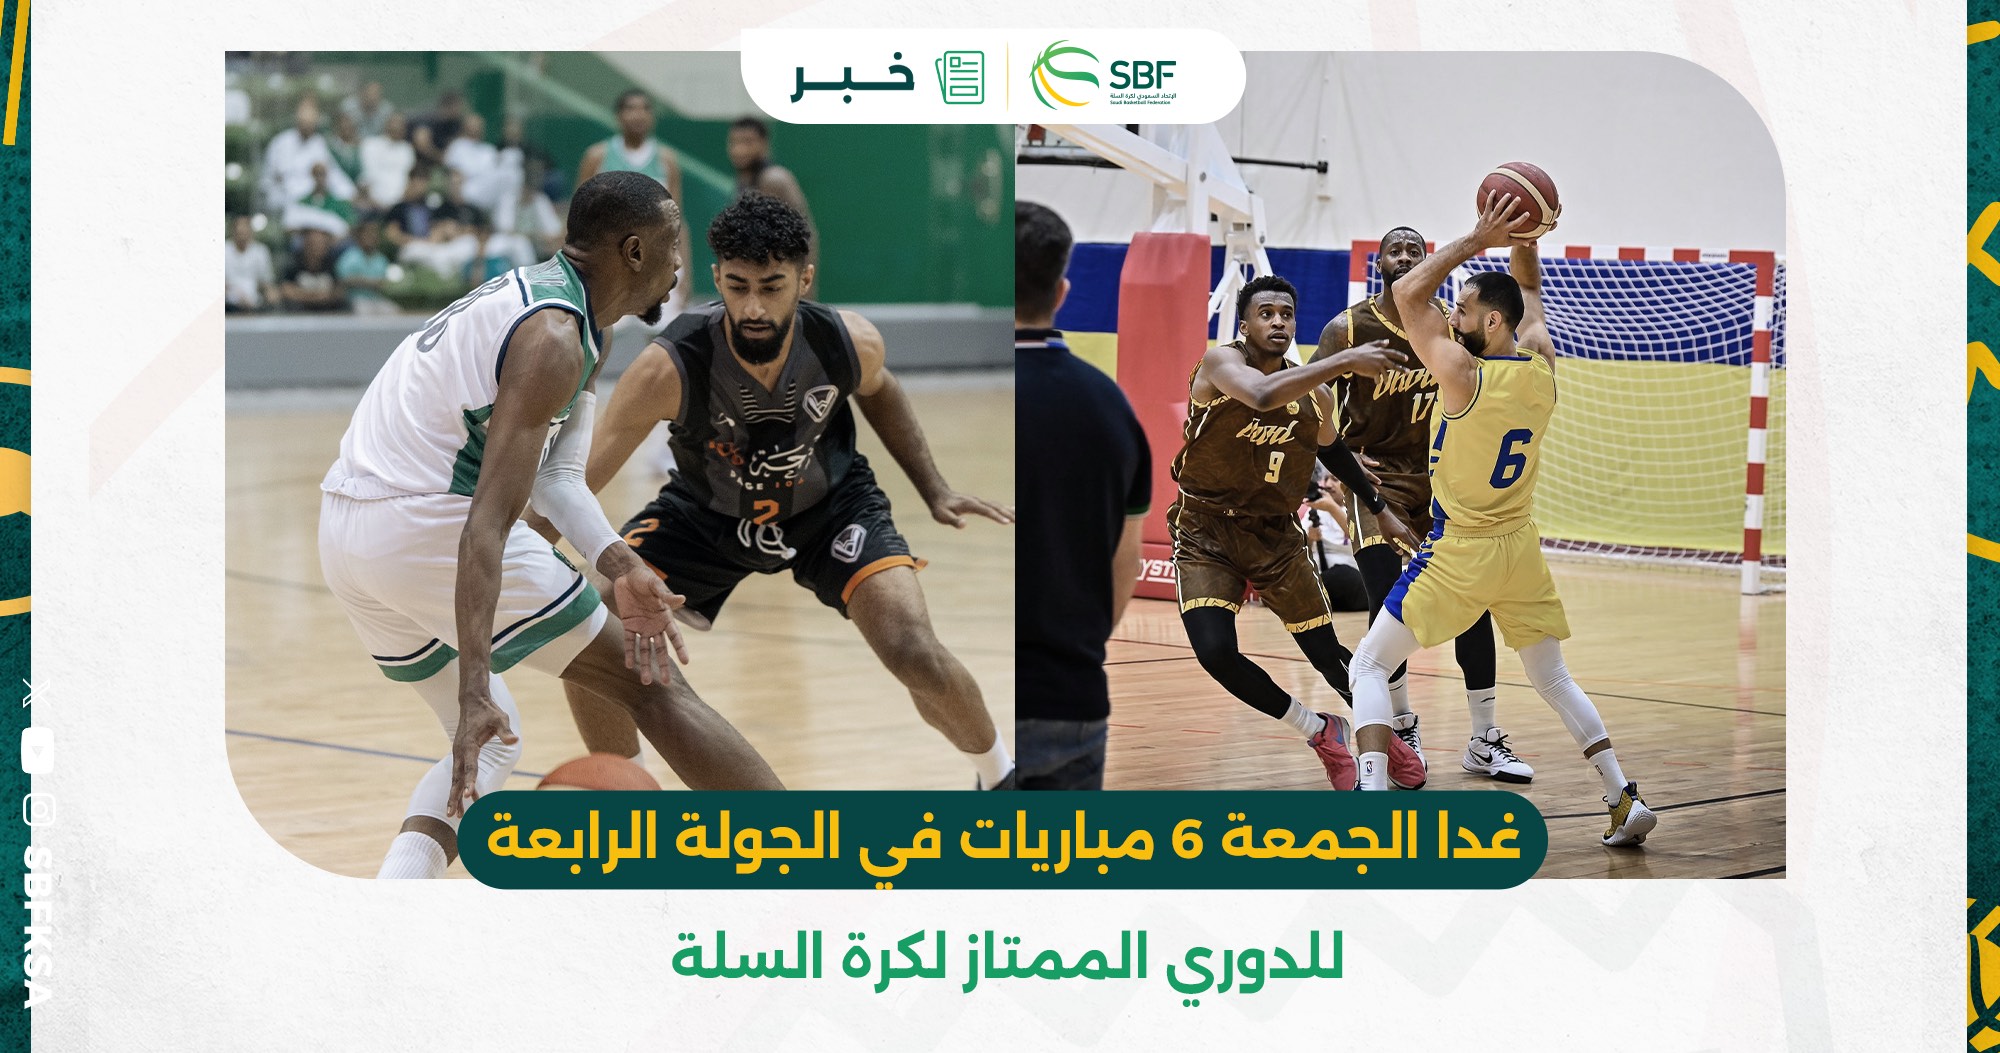 You are currently viewing غدا الجمعة (٦) مباريات في الجولة الرابعة للدوري الممتاز لكرة السلة